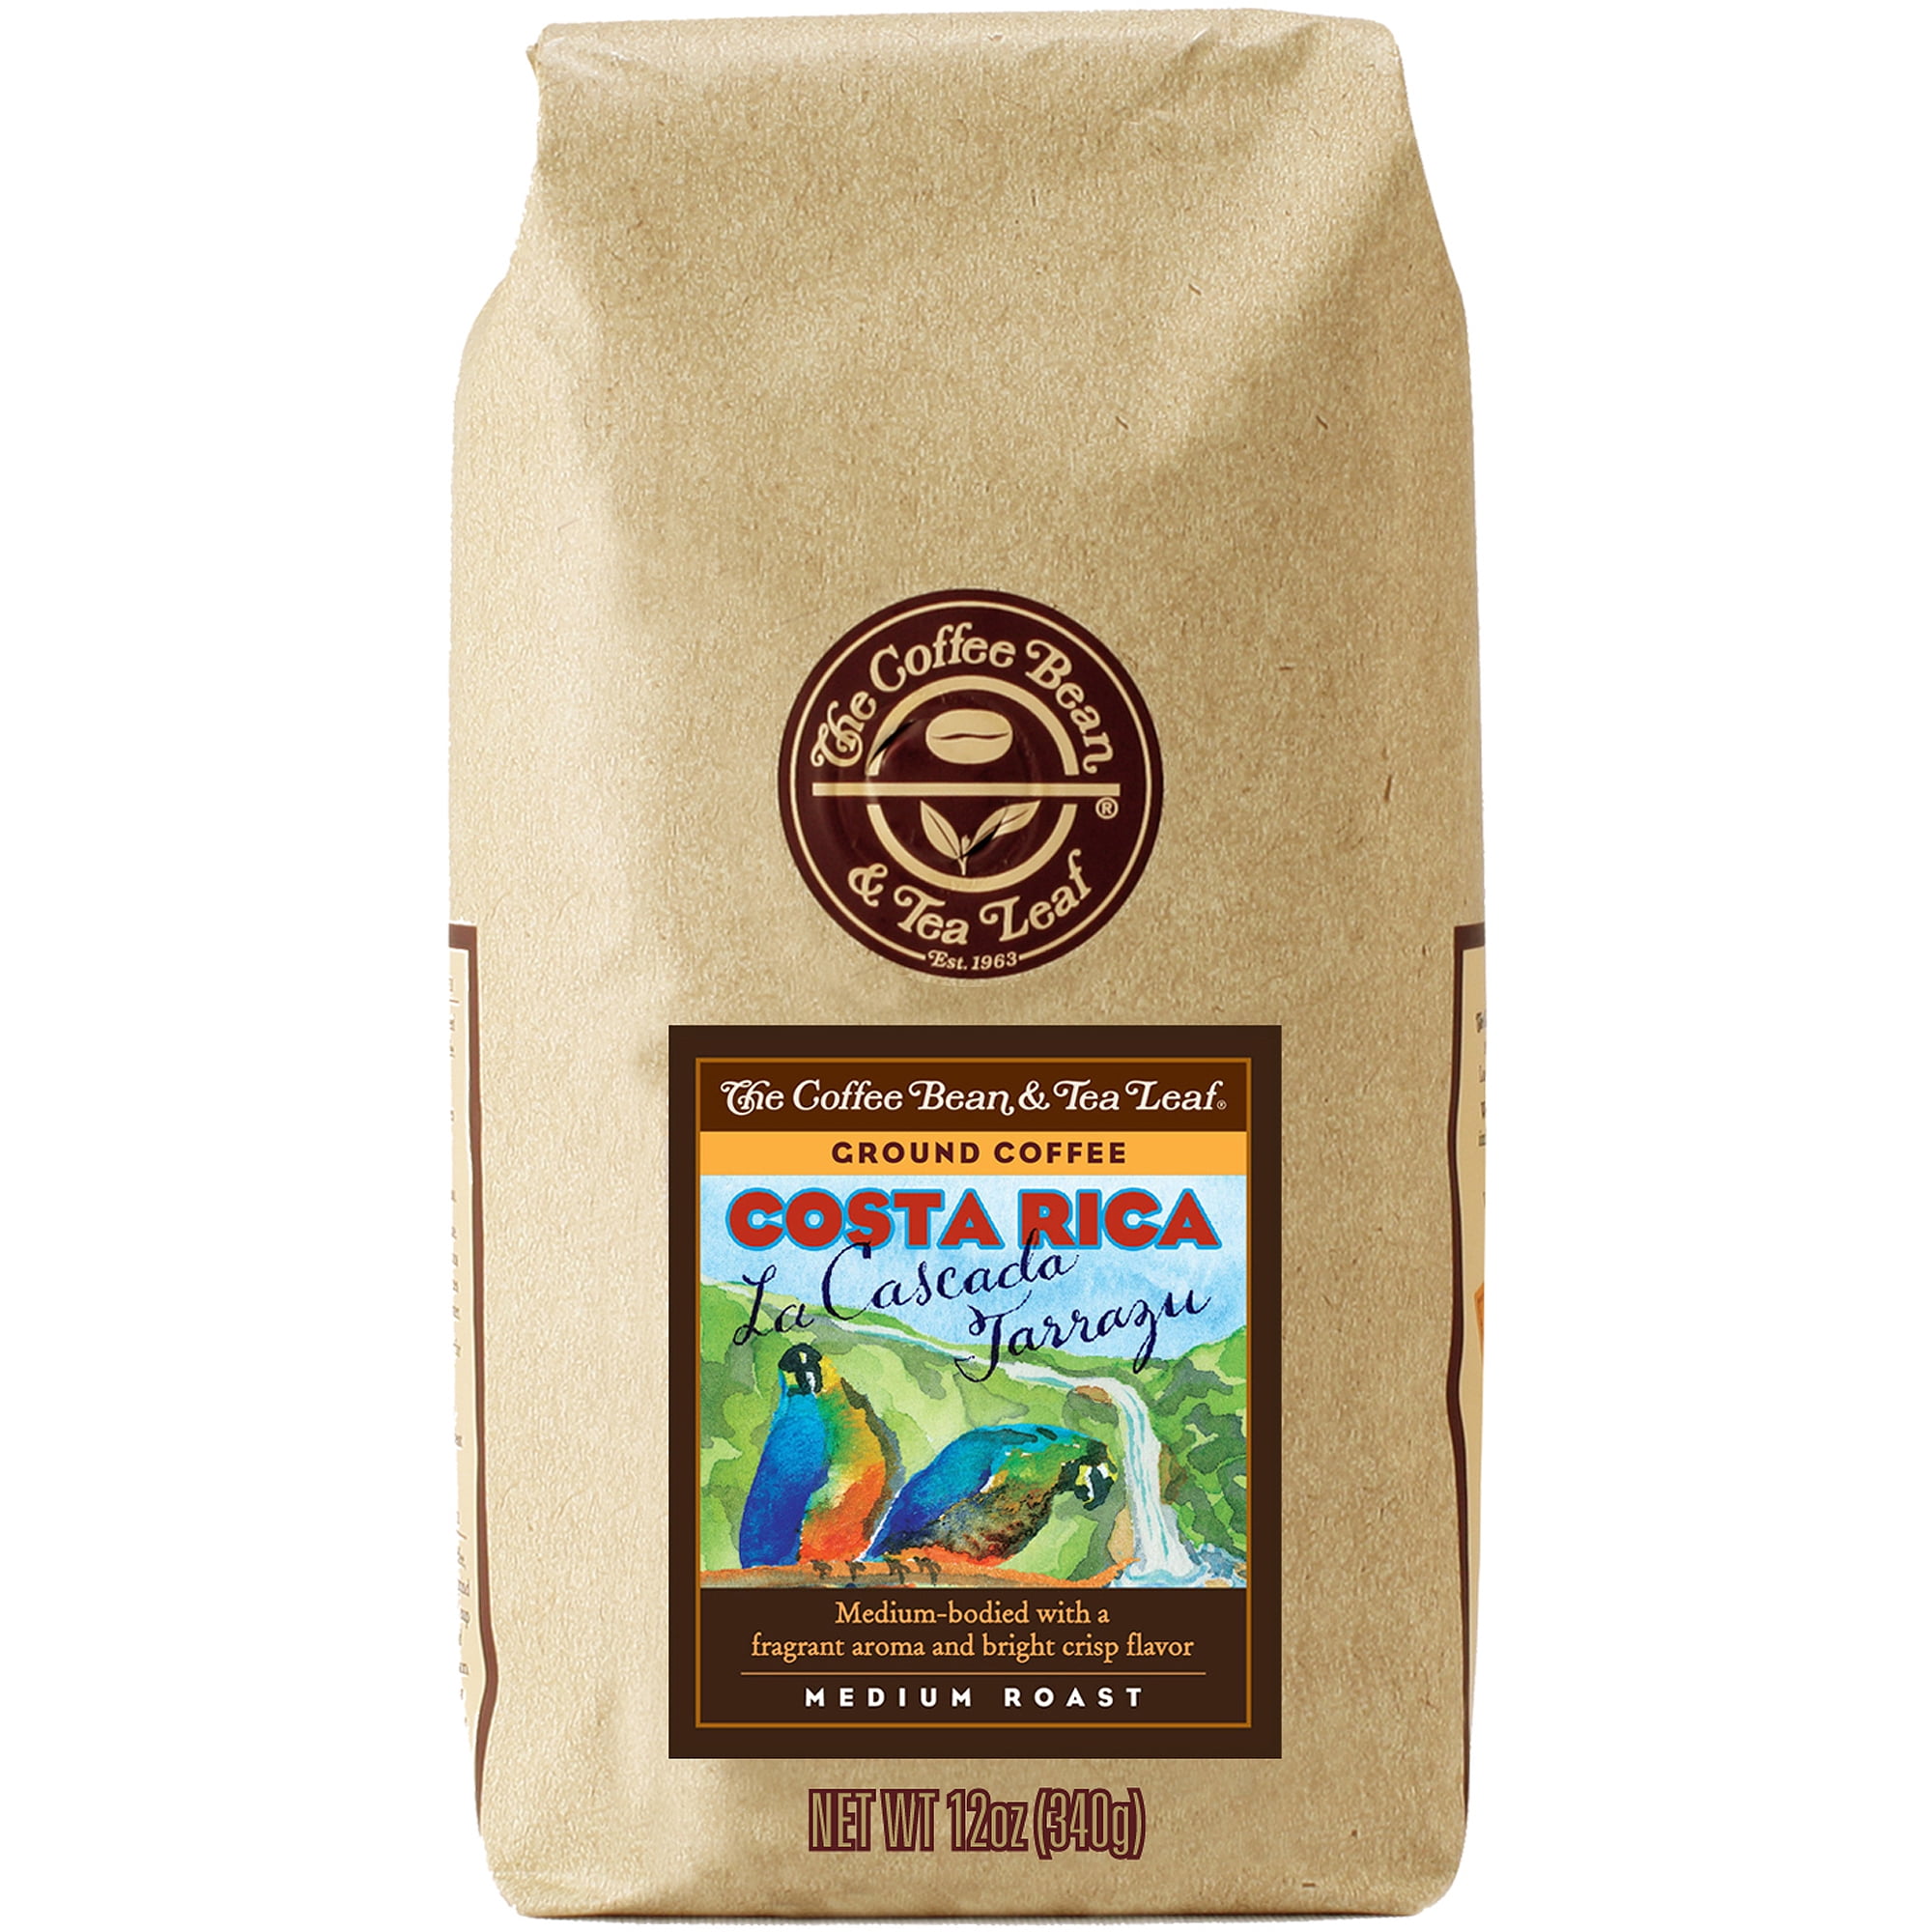 The Coffee Bean & Tea Leaf Costa Rica Medium Roast Ground